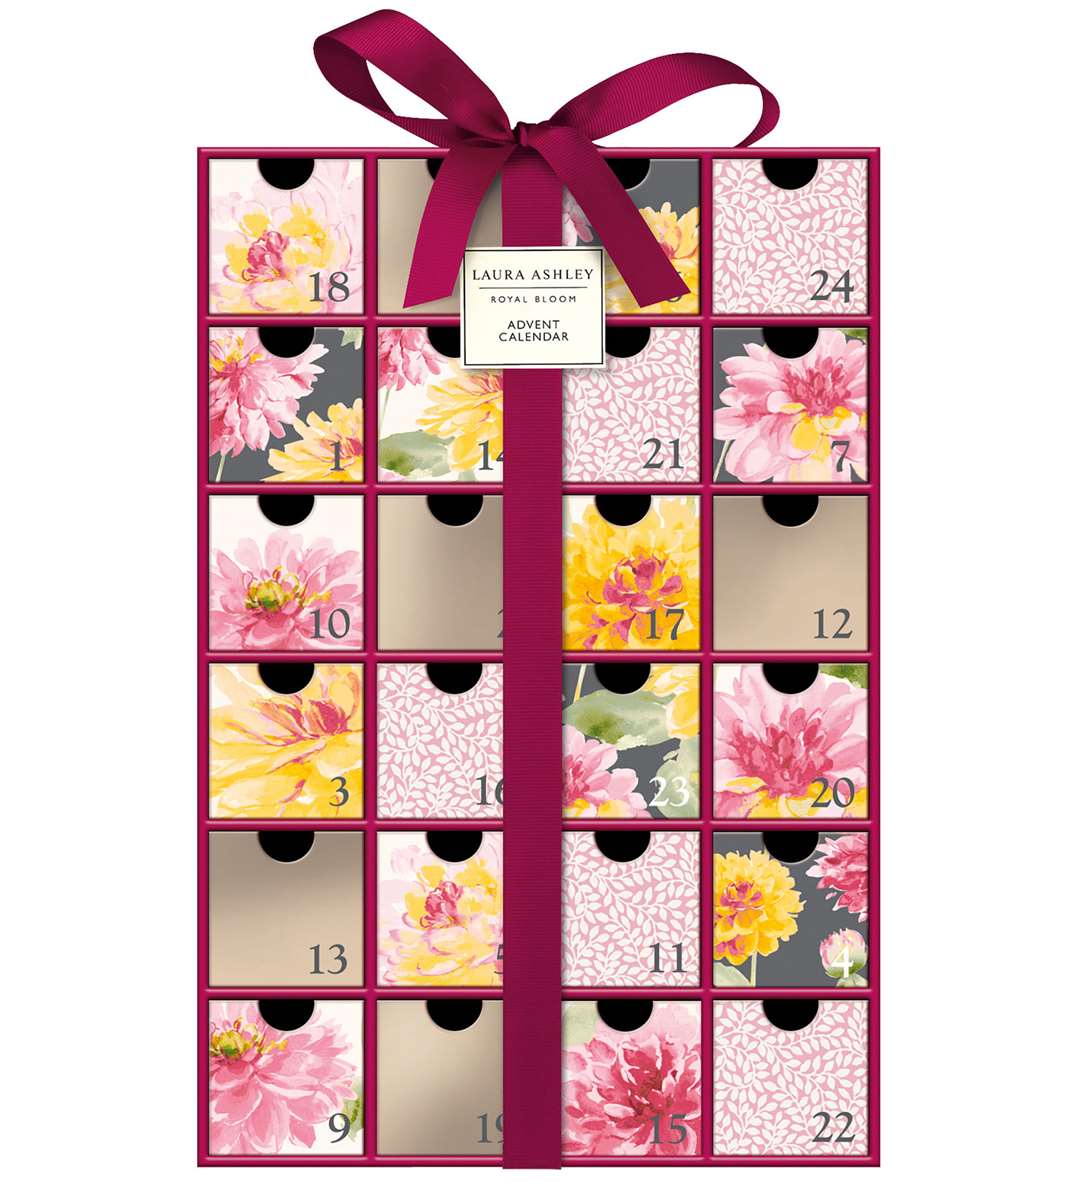 Laura Ashley's Royal Bloom calendar